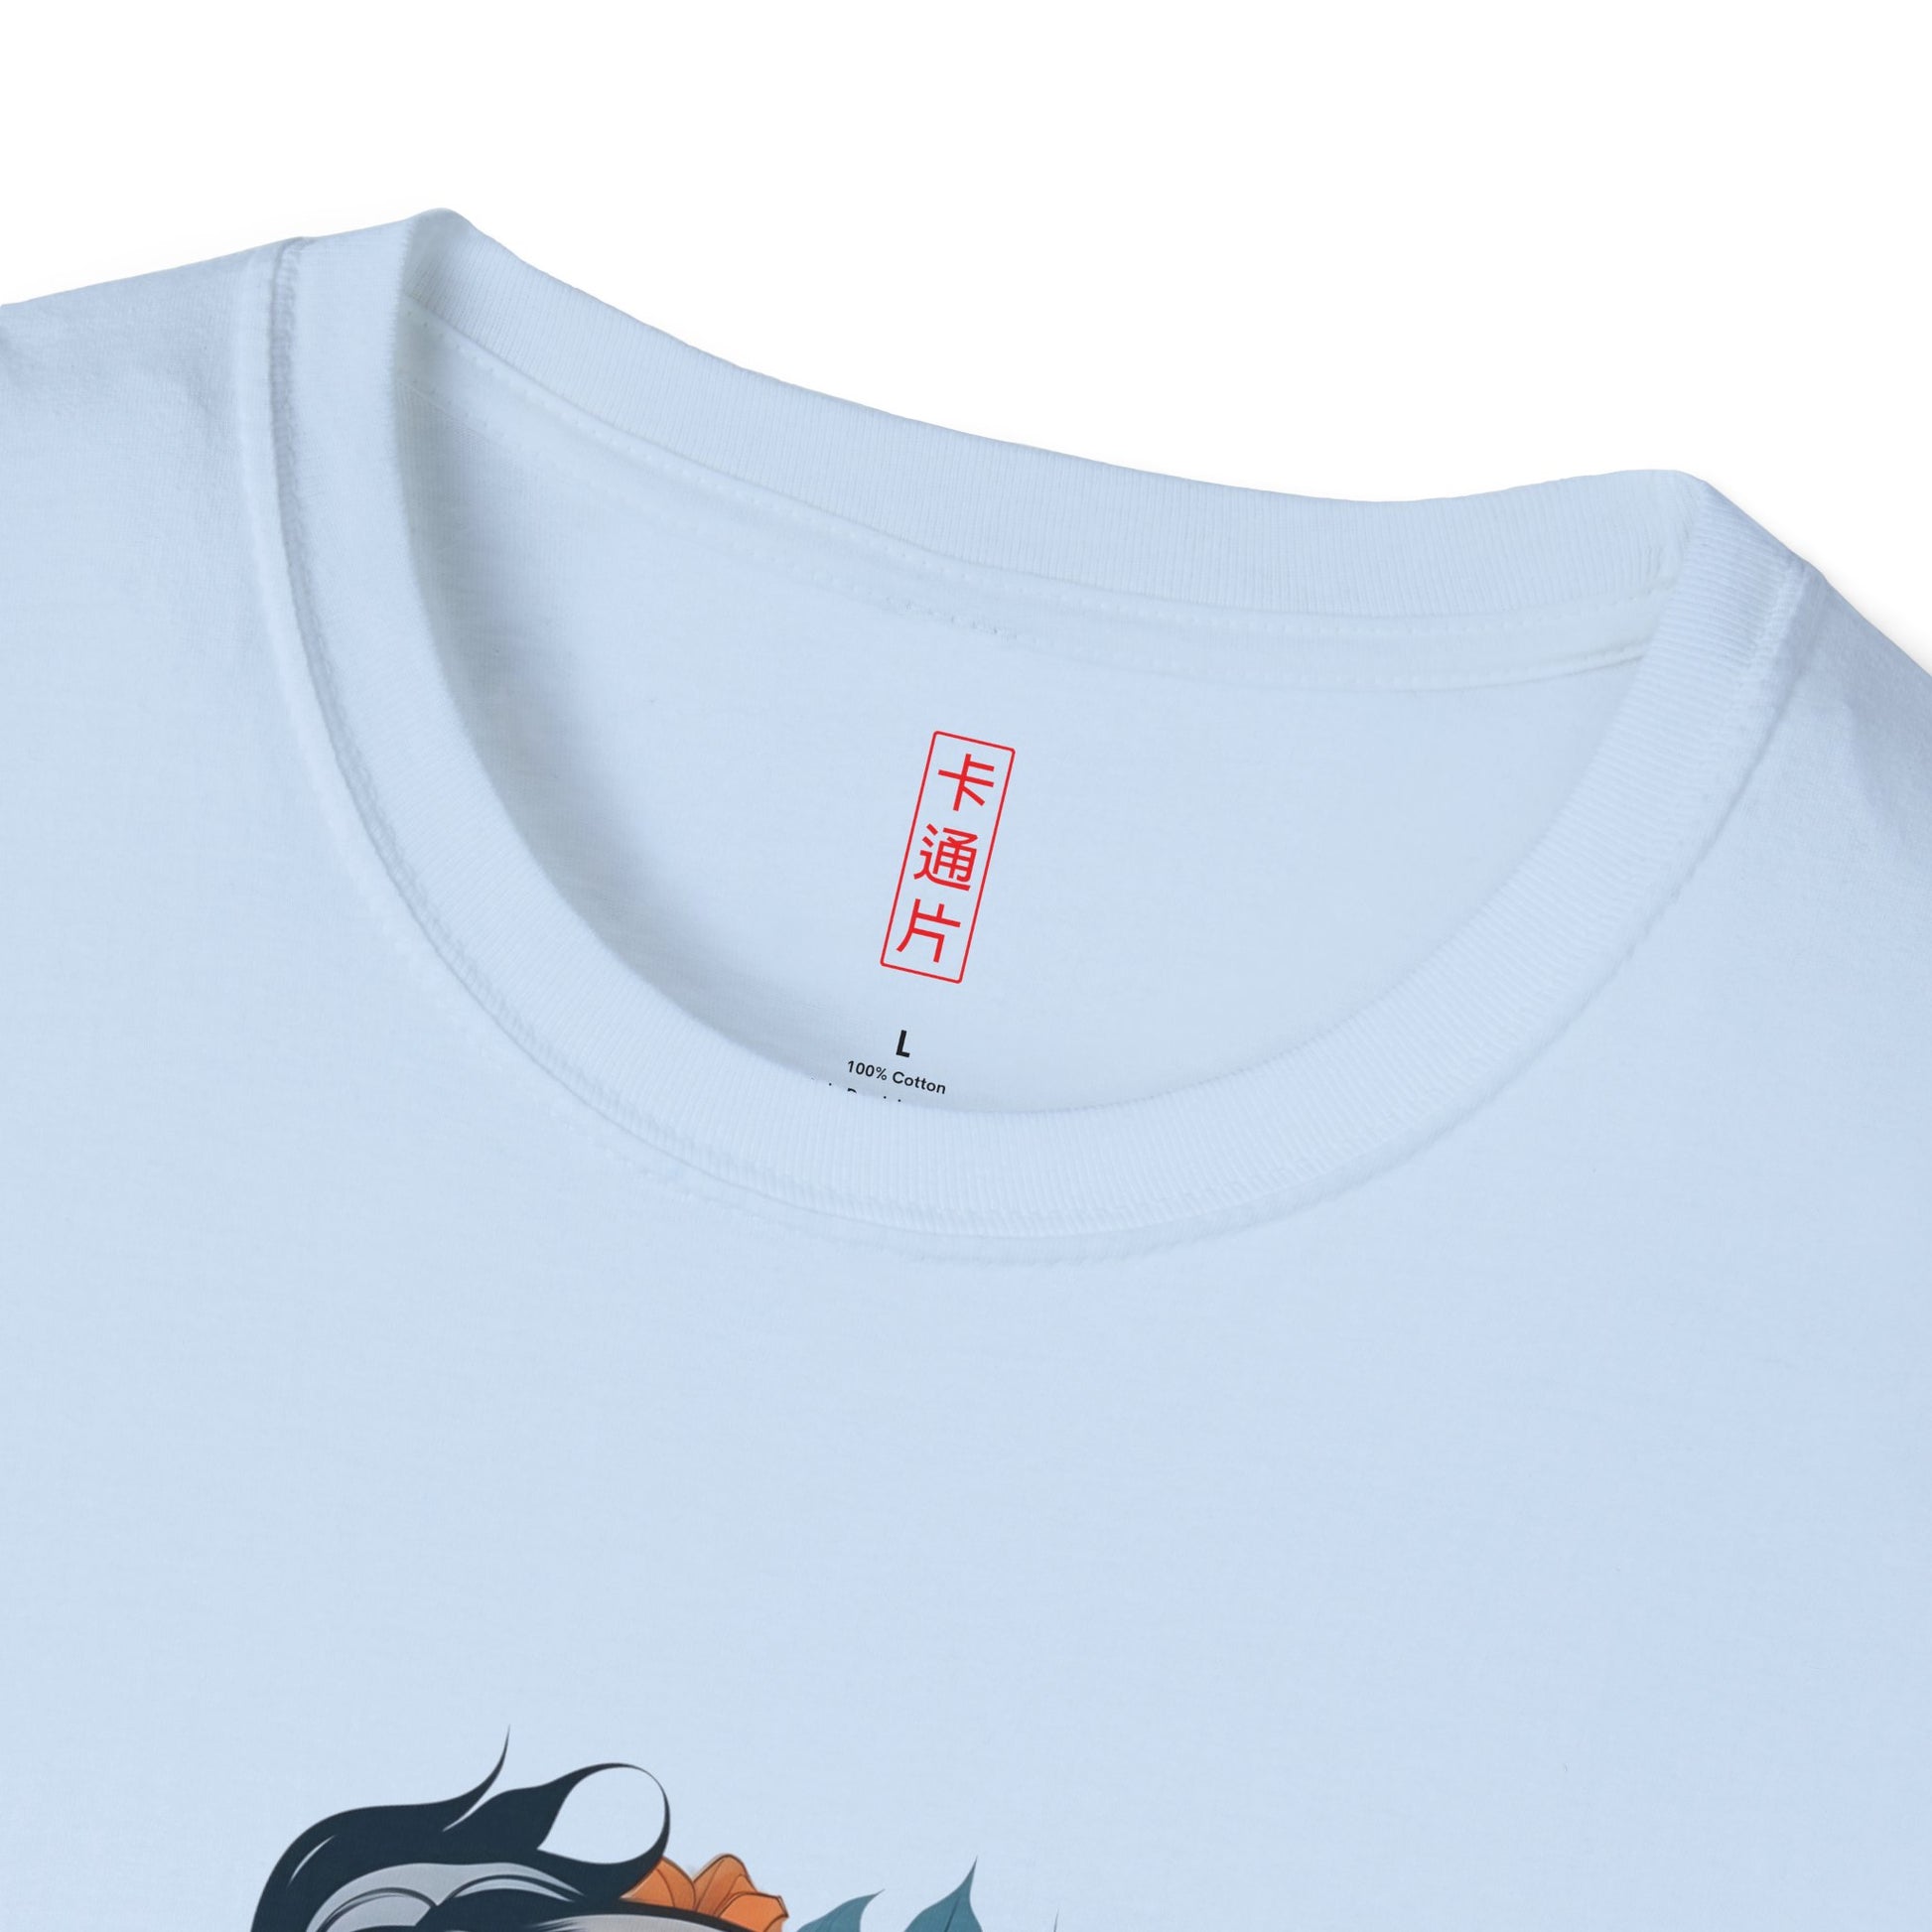 Kǎtōng Piàn - California Love Collection - 012 - Unisex Softstyle T-Shirt Printify